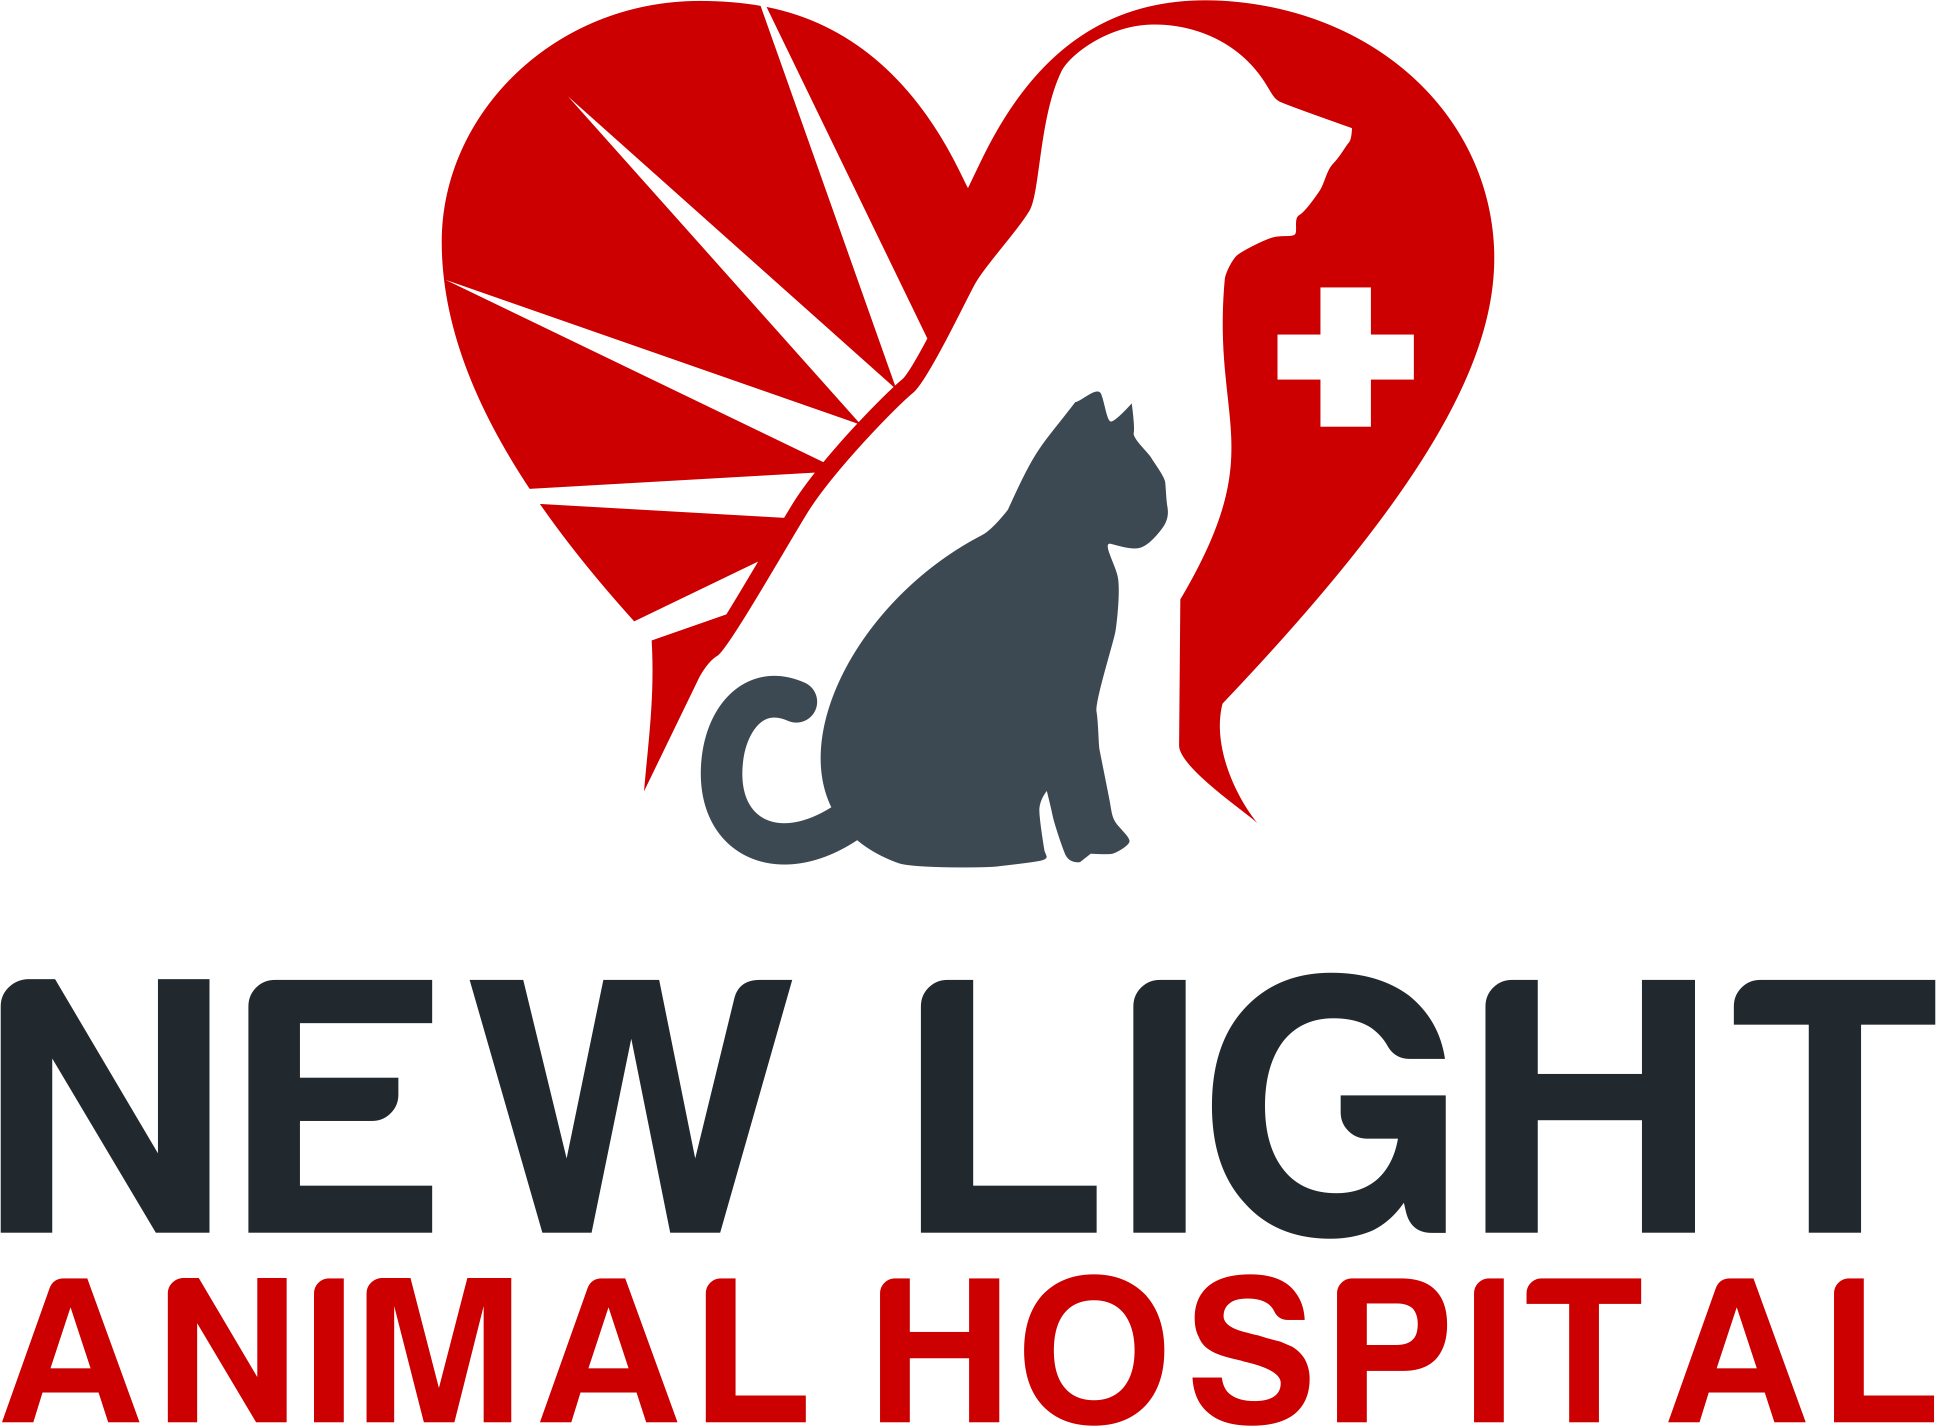 New Light Animal Hospital